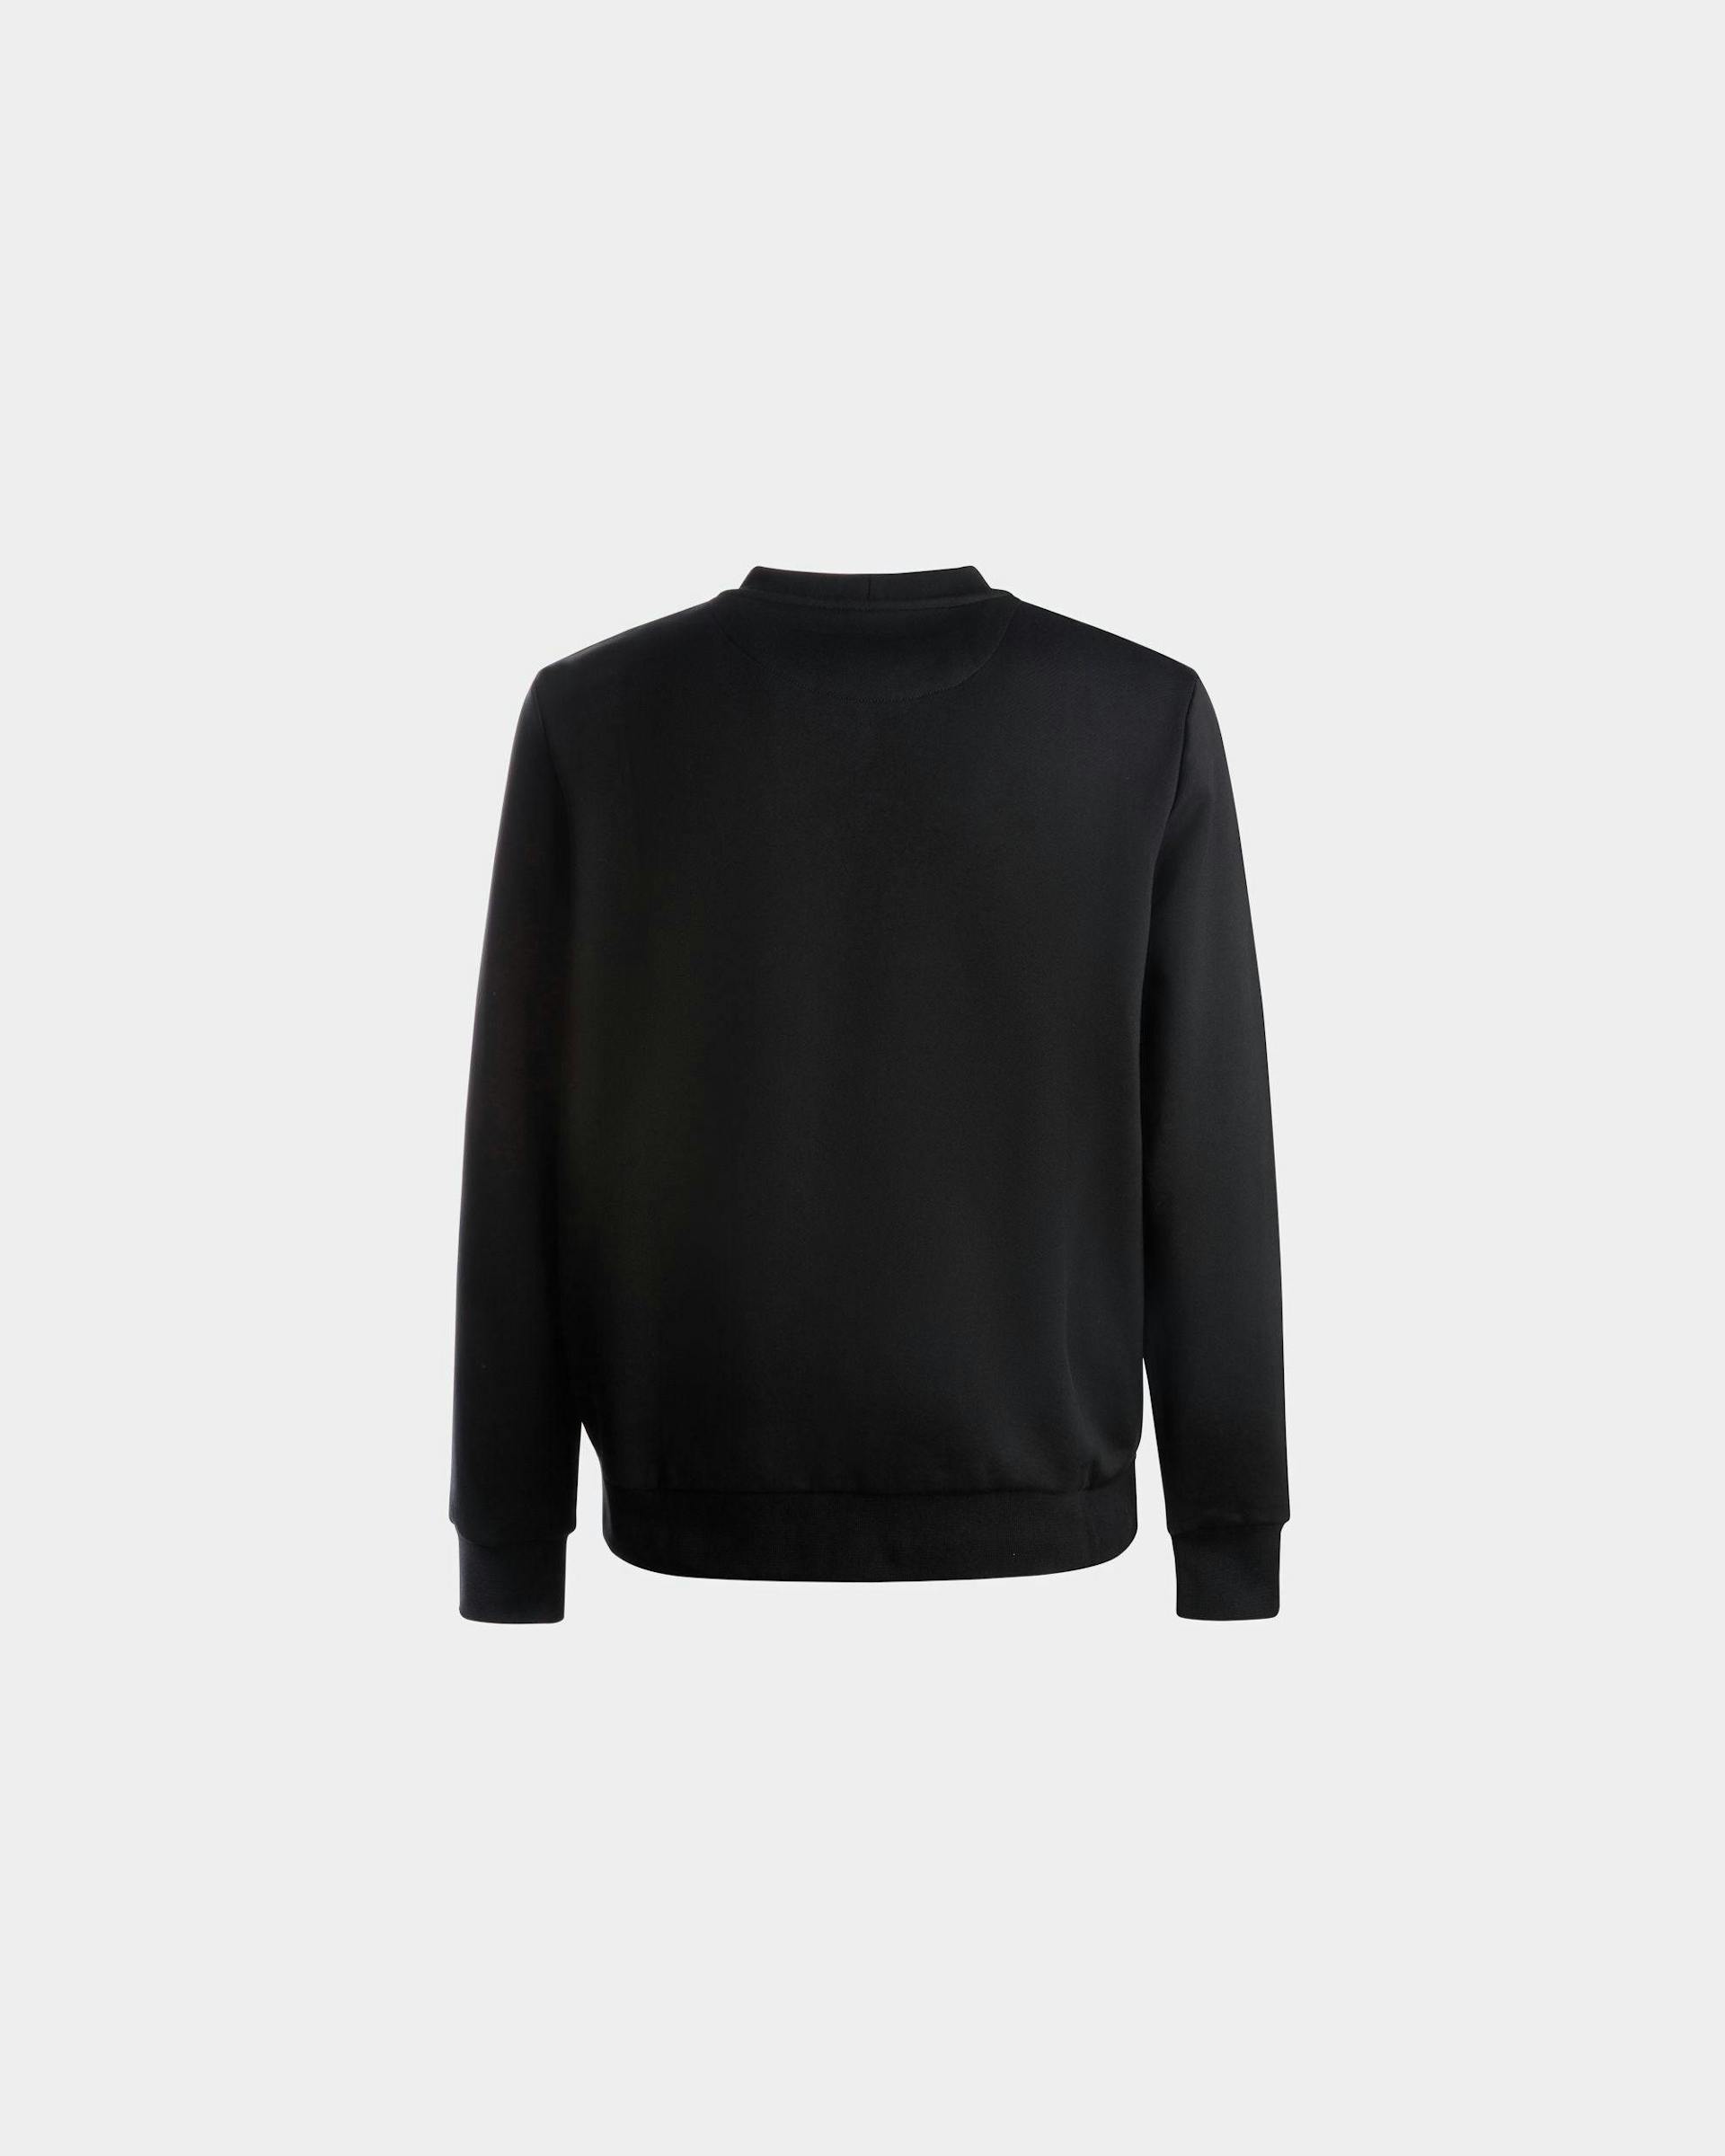 Men's Sweatshirt In Black Stretch Cotton | Bally | Still Life Back